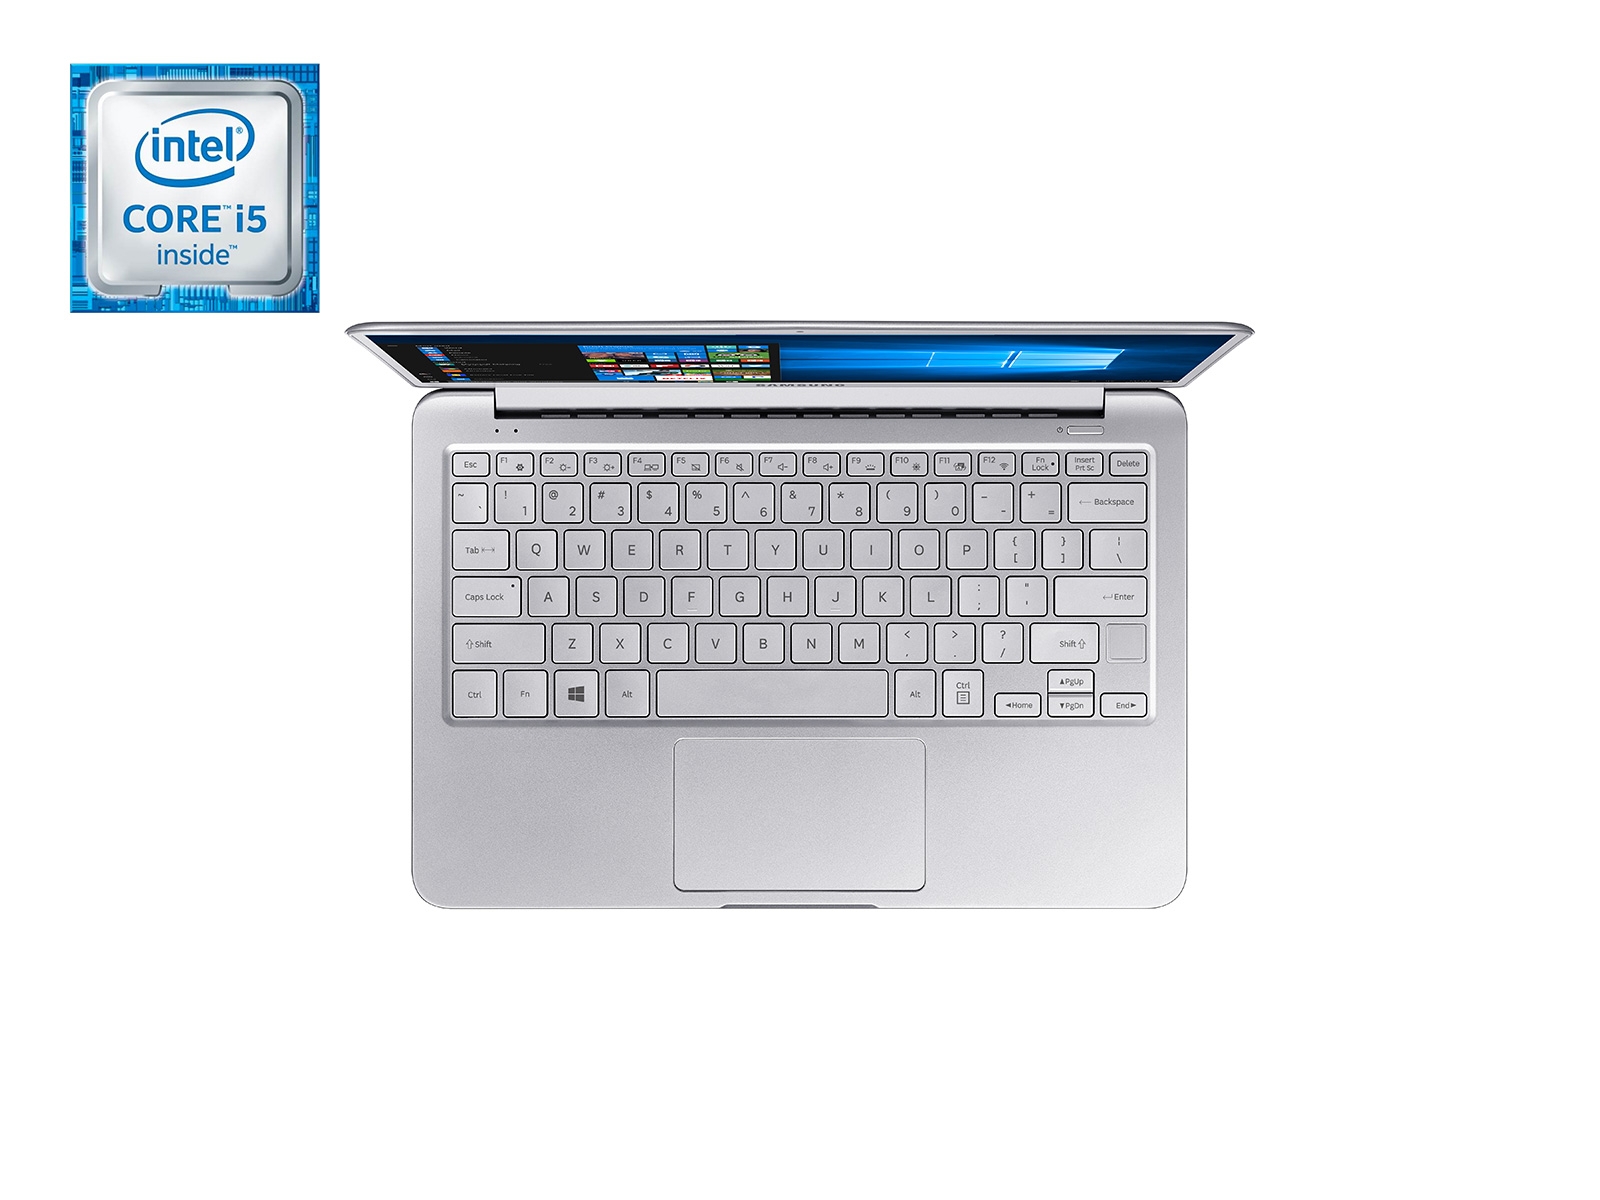 Thumbnail image of Notebook 9 13.3” (8GB RAM)